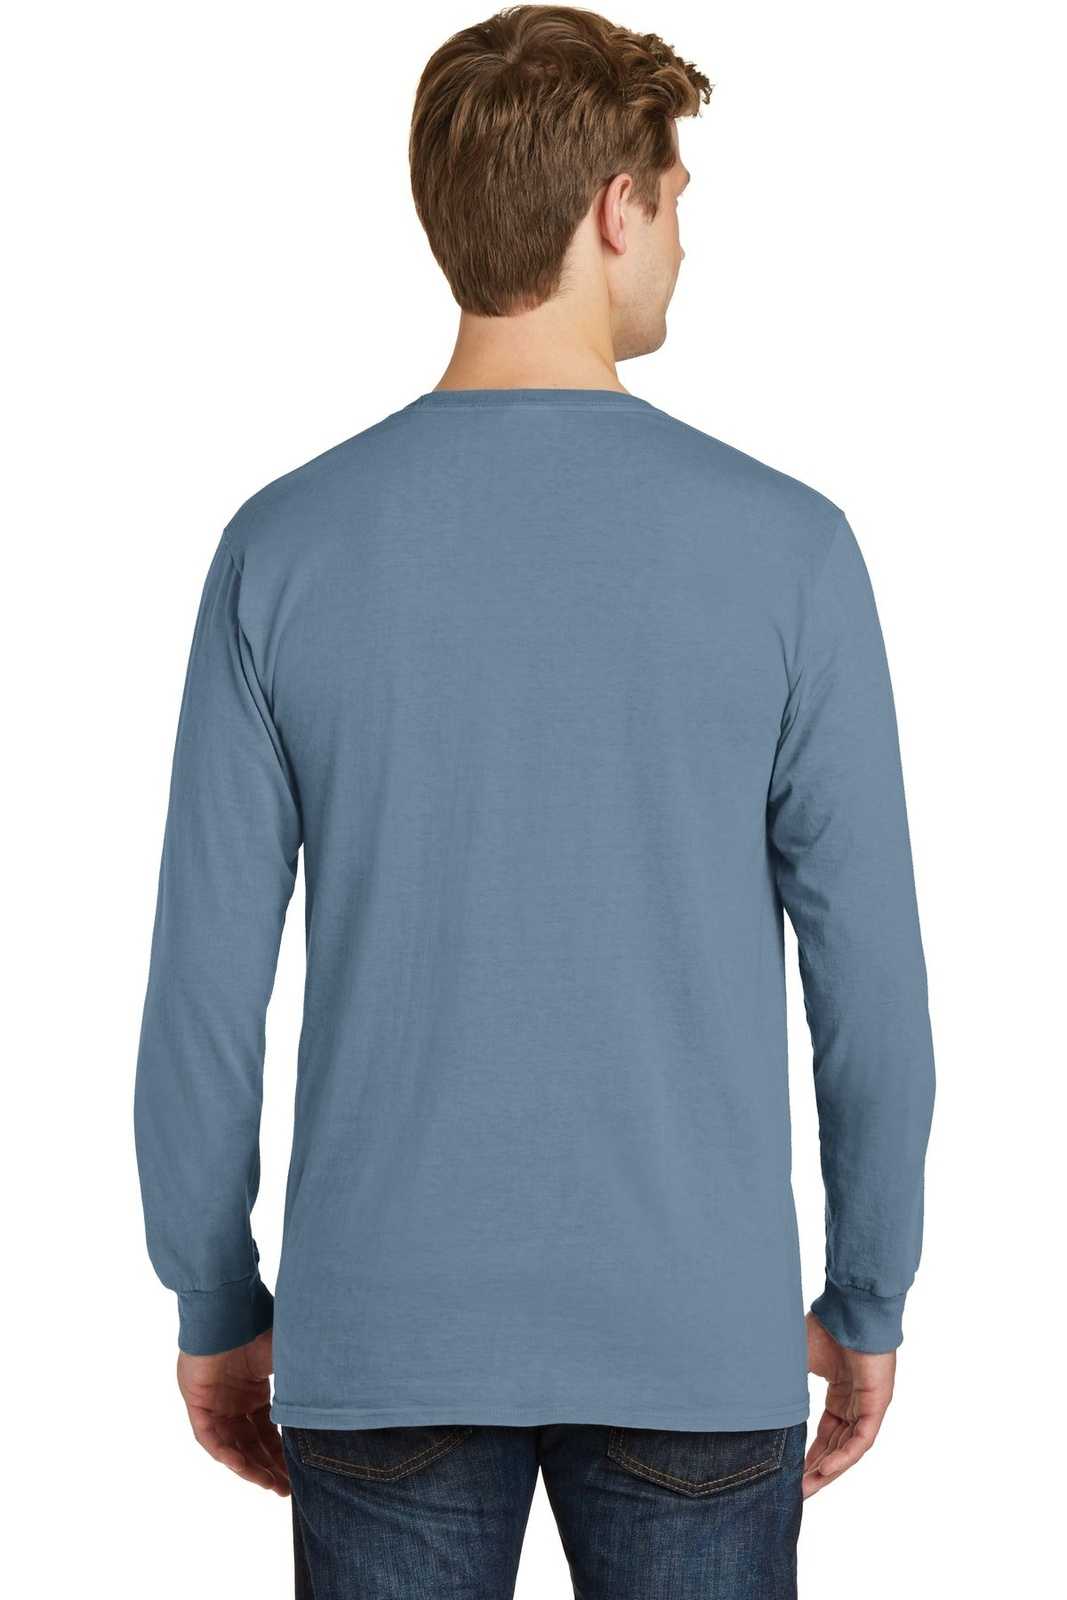 Port & Company PC099LSP Beach Wash Garment-Dyed Long Sleeve Pocket Tee - Denim Blue - HIT a Double - 1